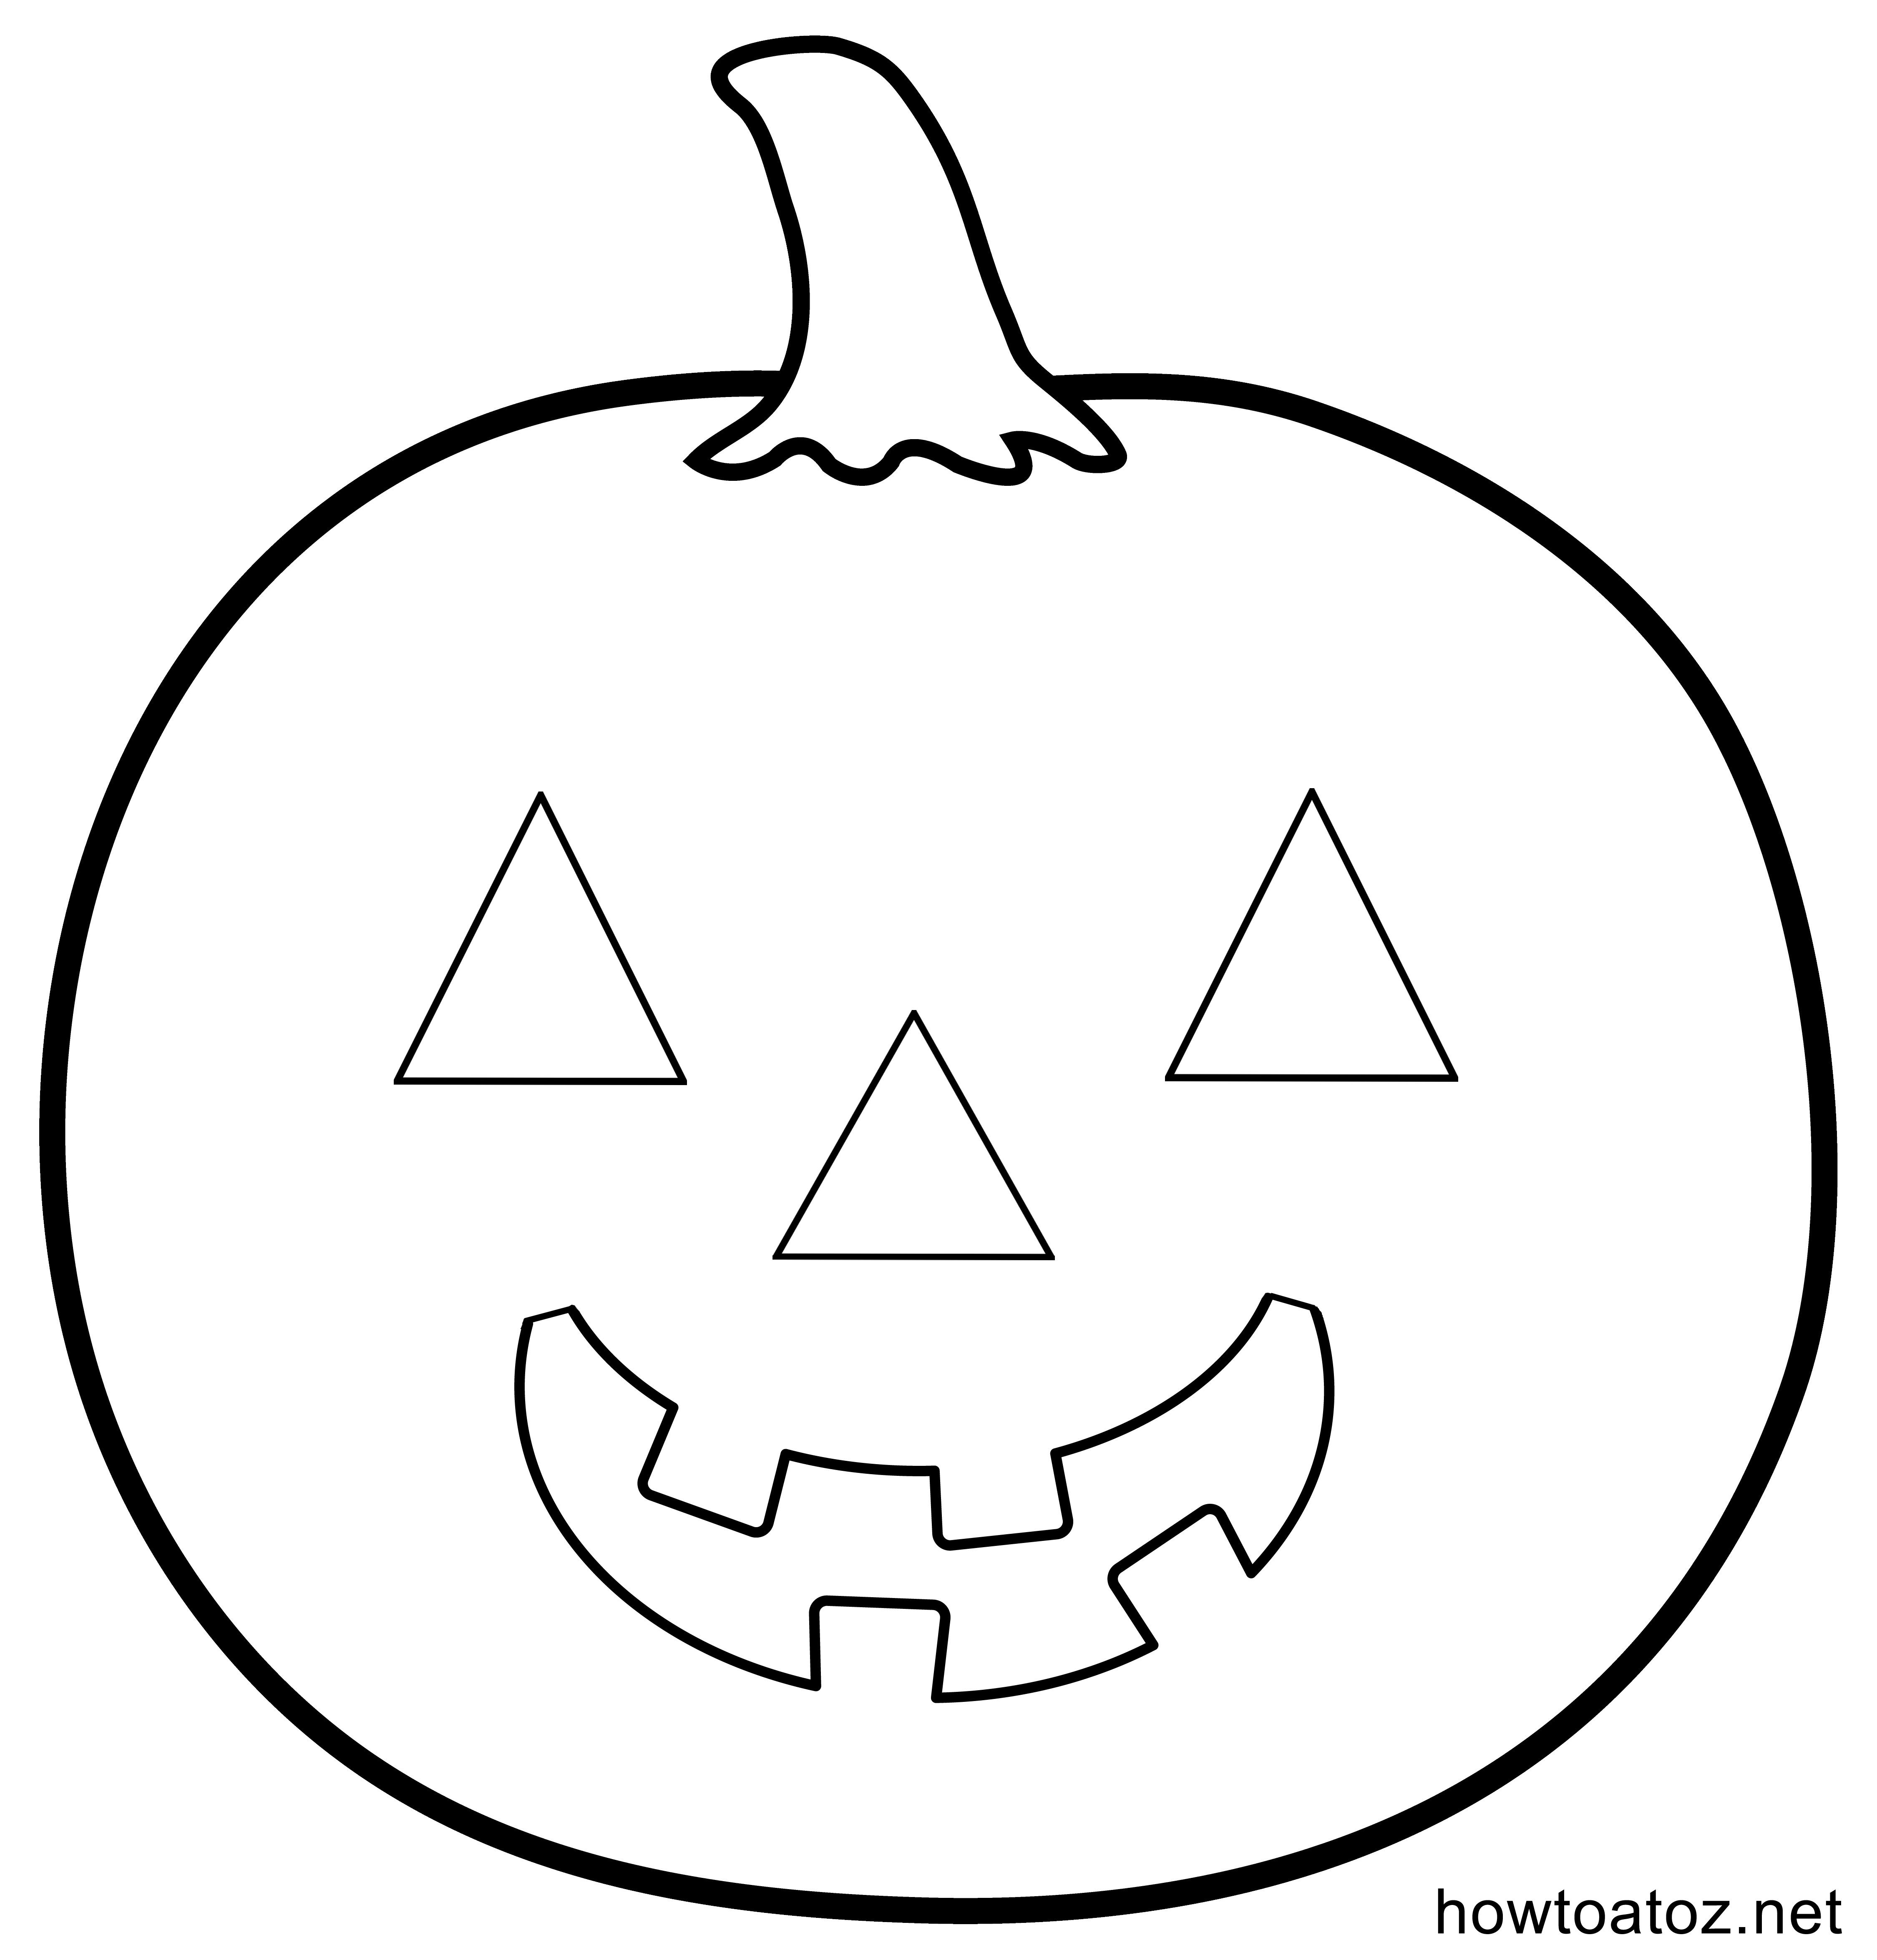 Free Halloween Decoration Stencils And Templates #halloween - Jack O Lantern Templates Printable Free